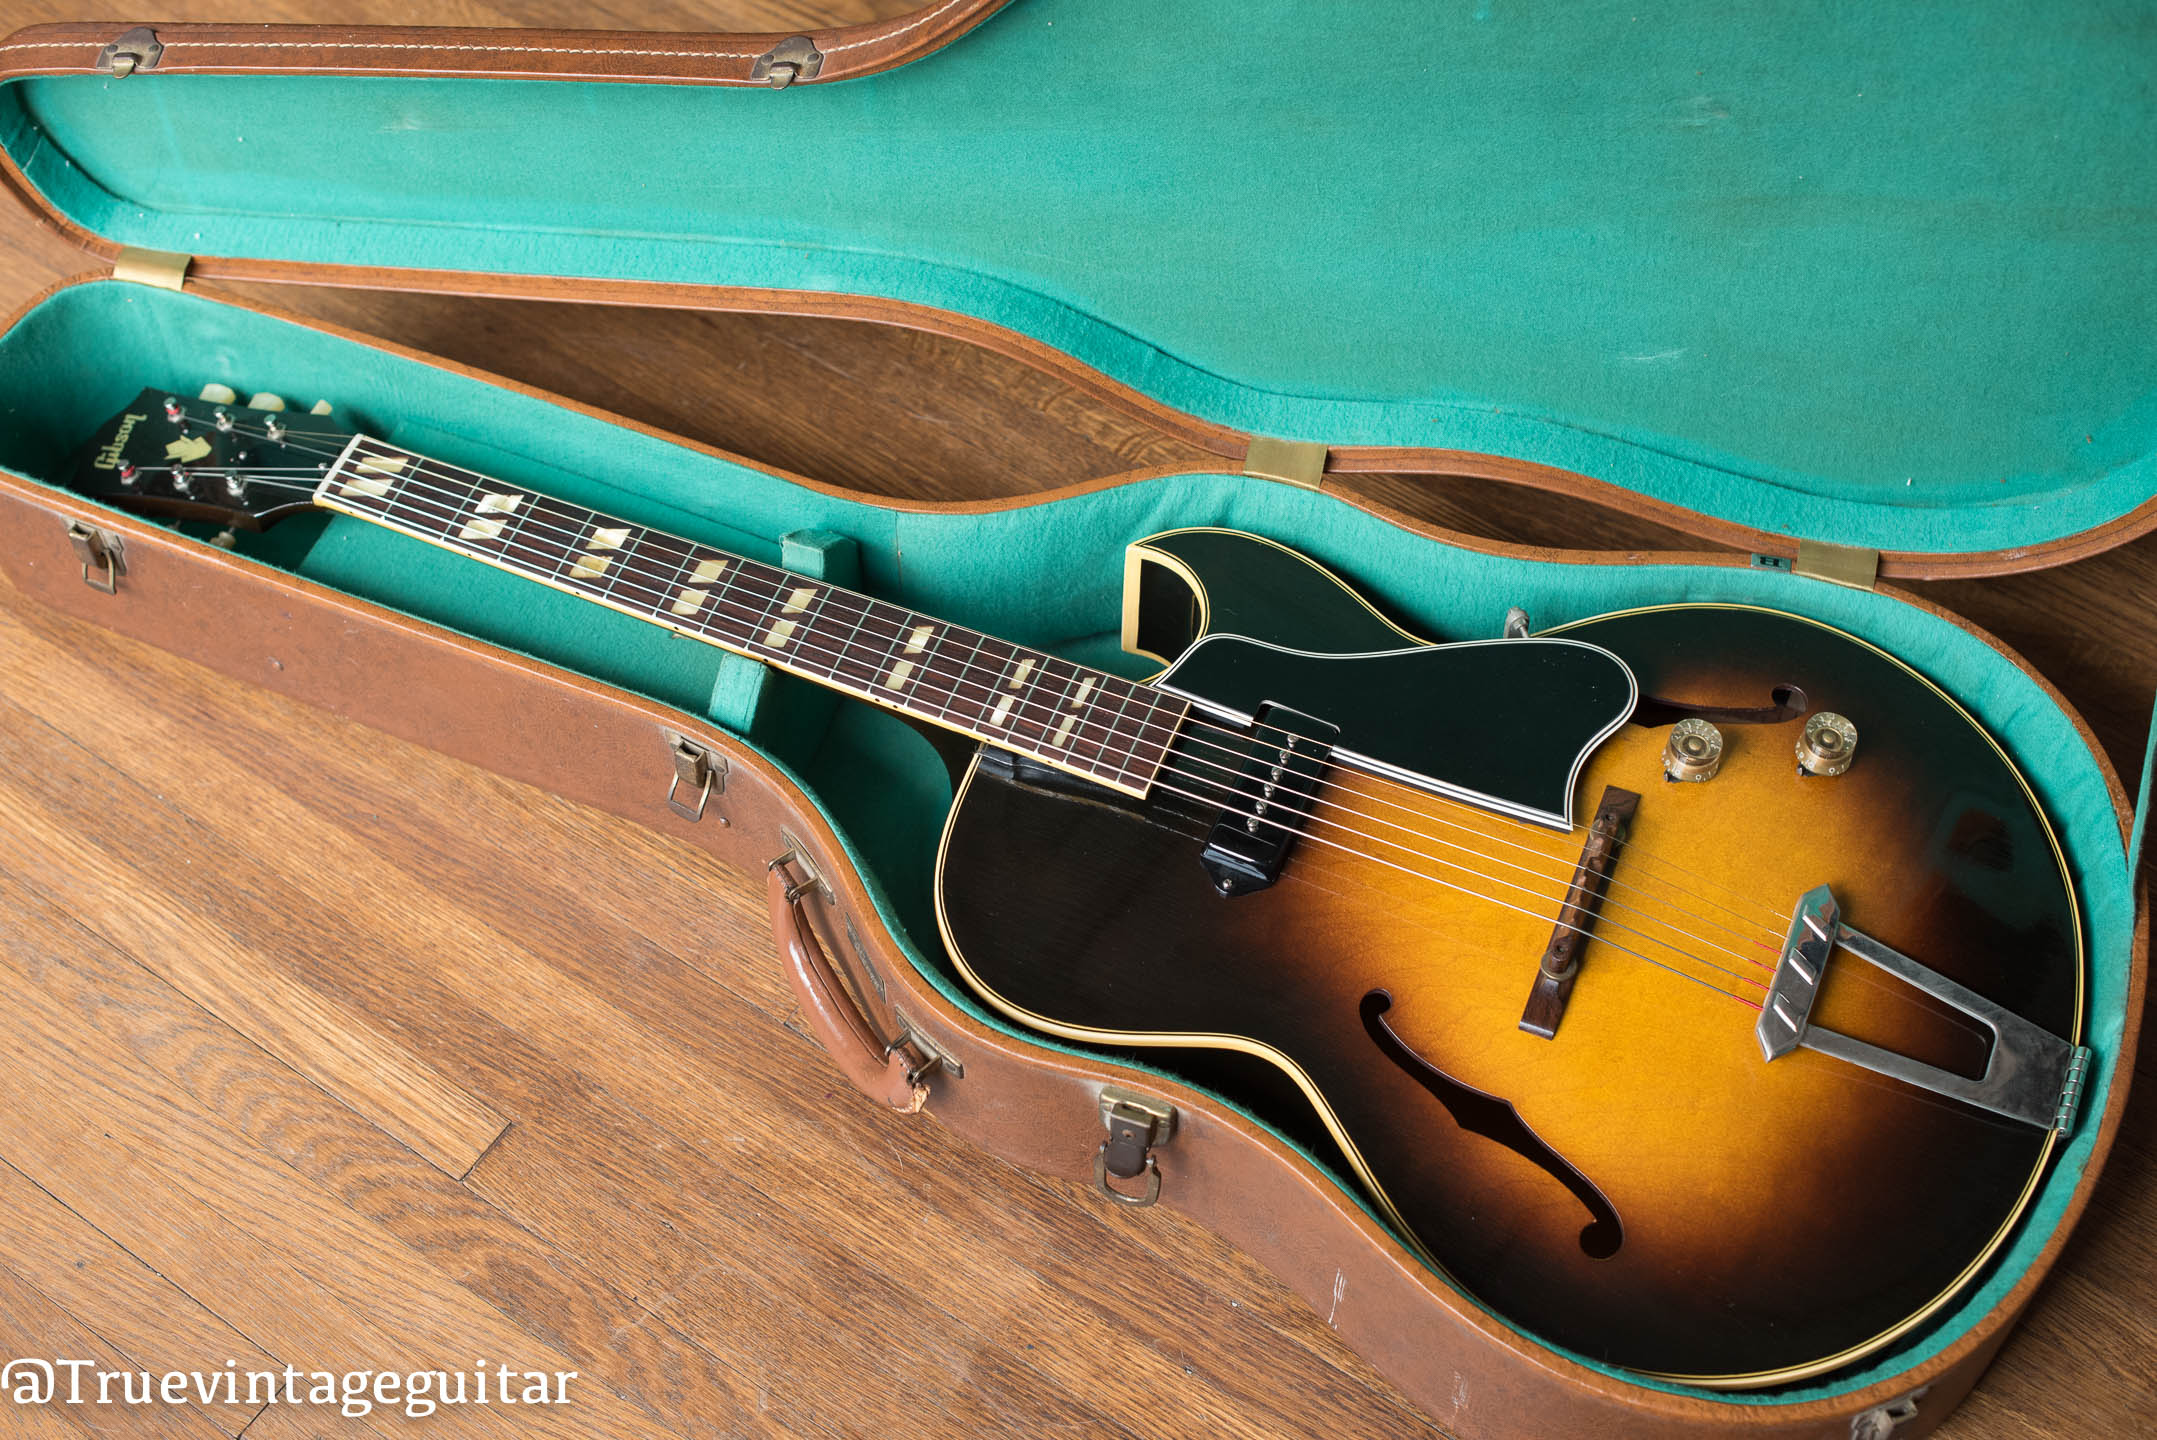 Vintage 1951 Gibson ES-175 electric guitar